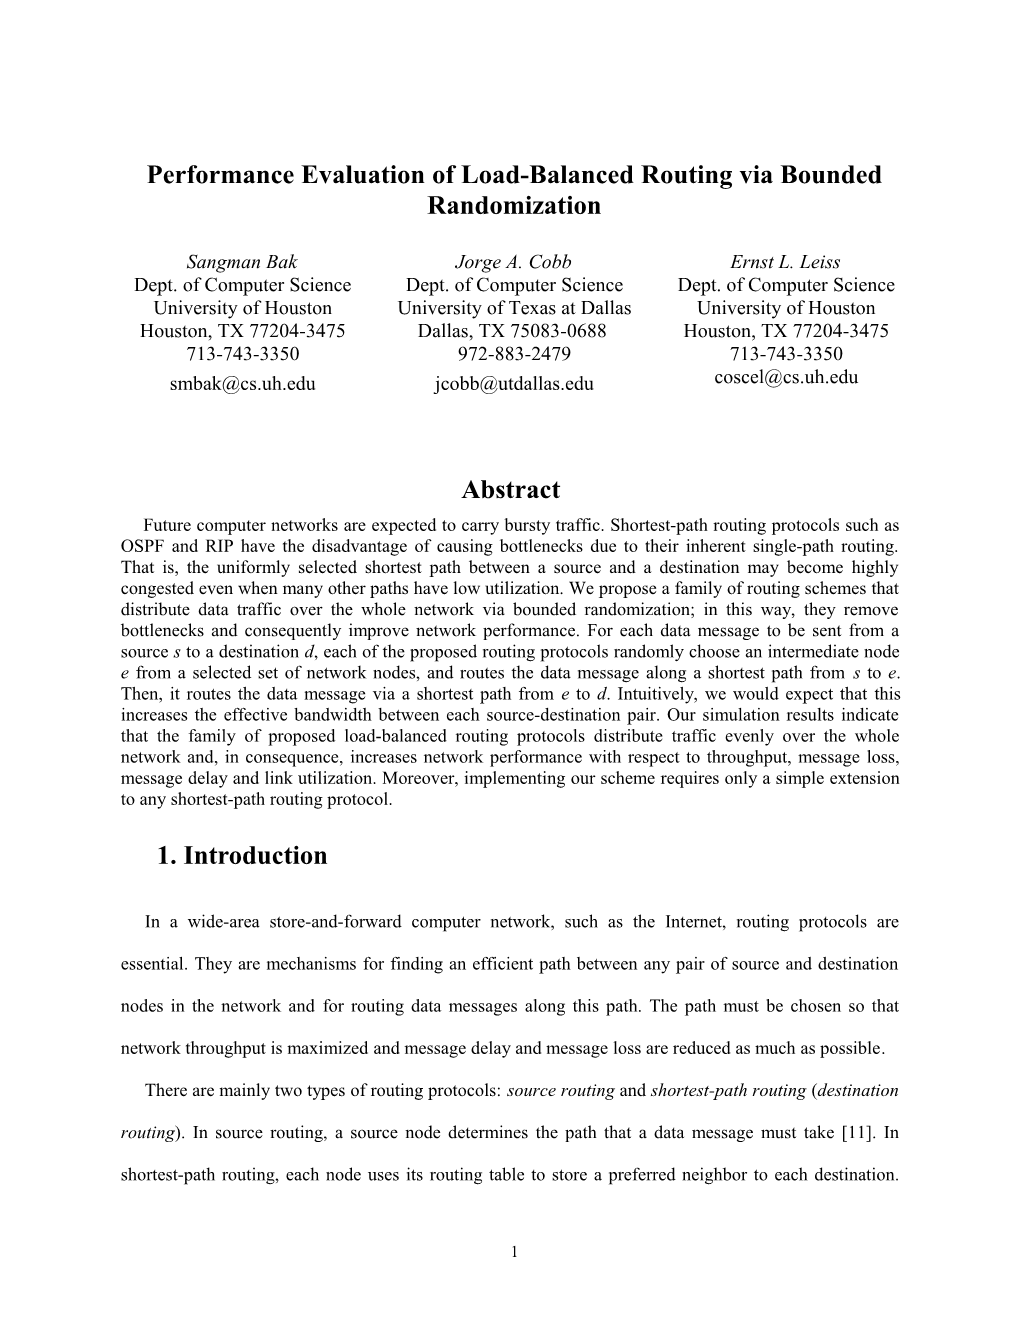 Load-Balanced Routing Via Bounded Randomization